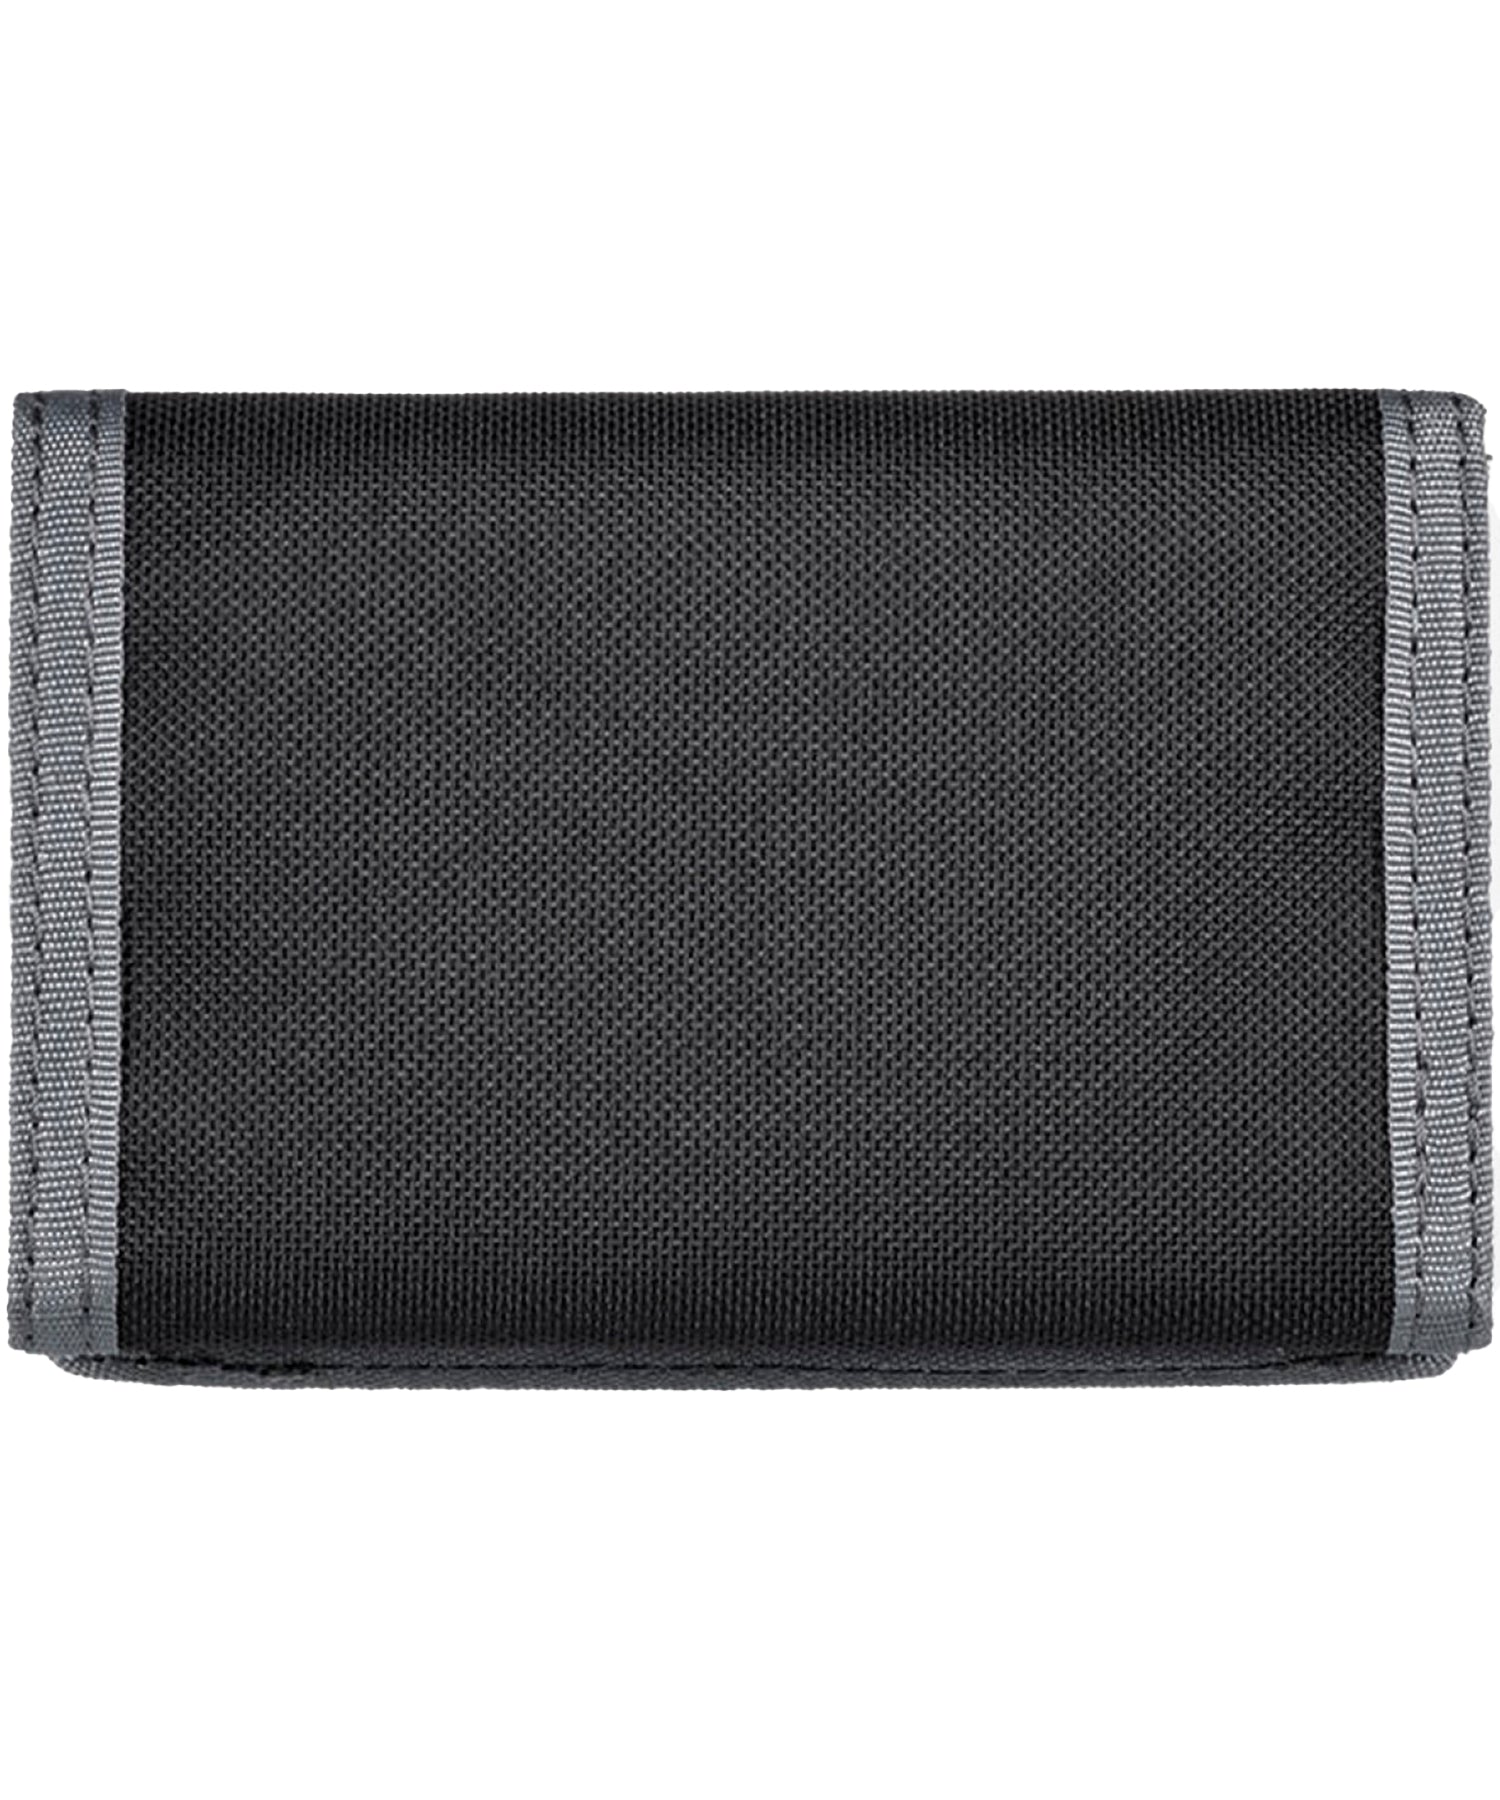 element-cartera tri-fold-army-billetera de tres hojas color-negro-ribete-gris-loneta de poliéster-logo element en el centro.